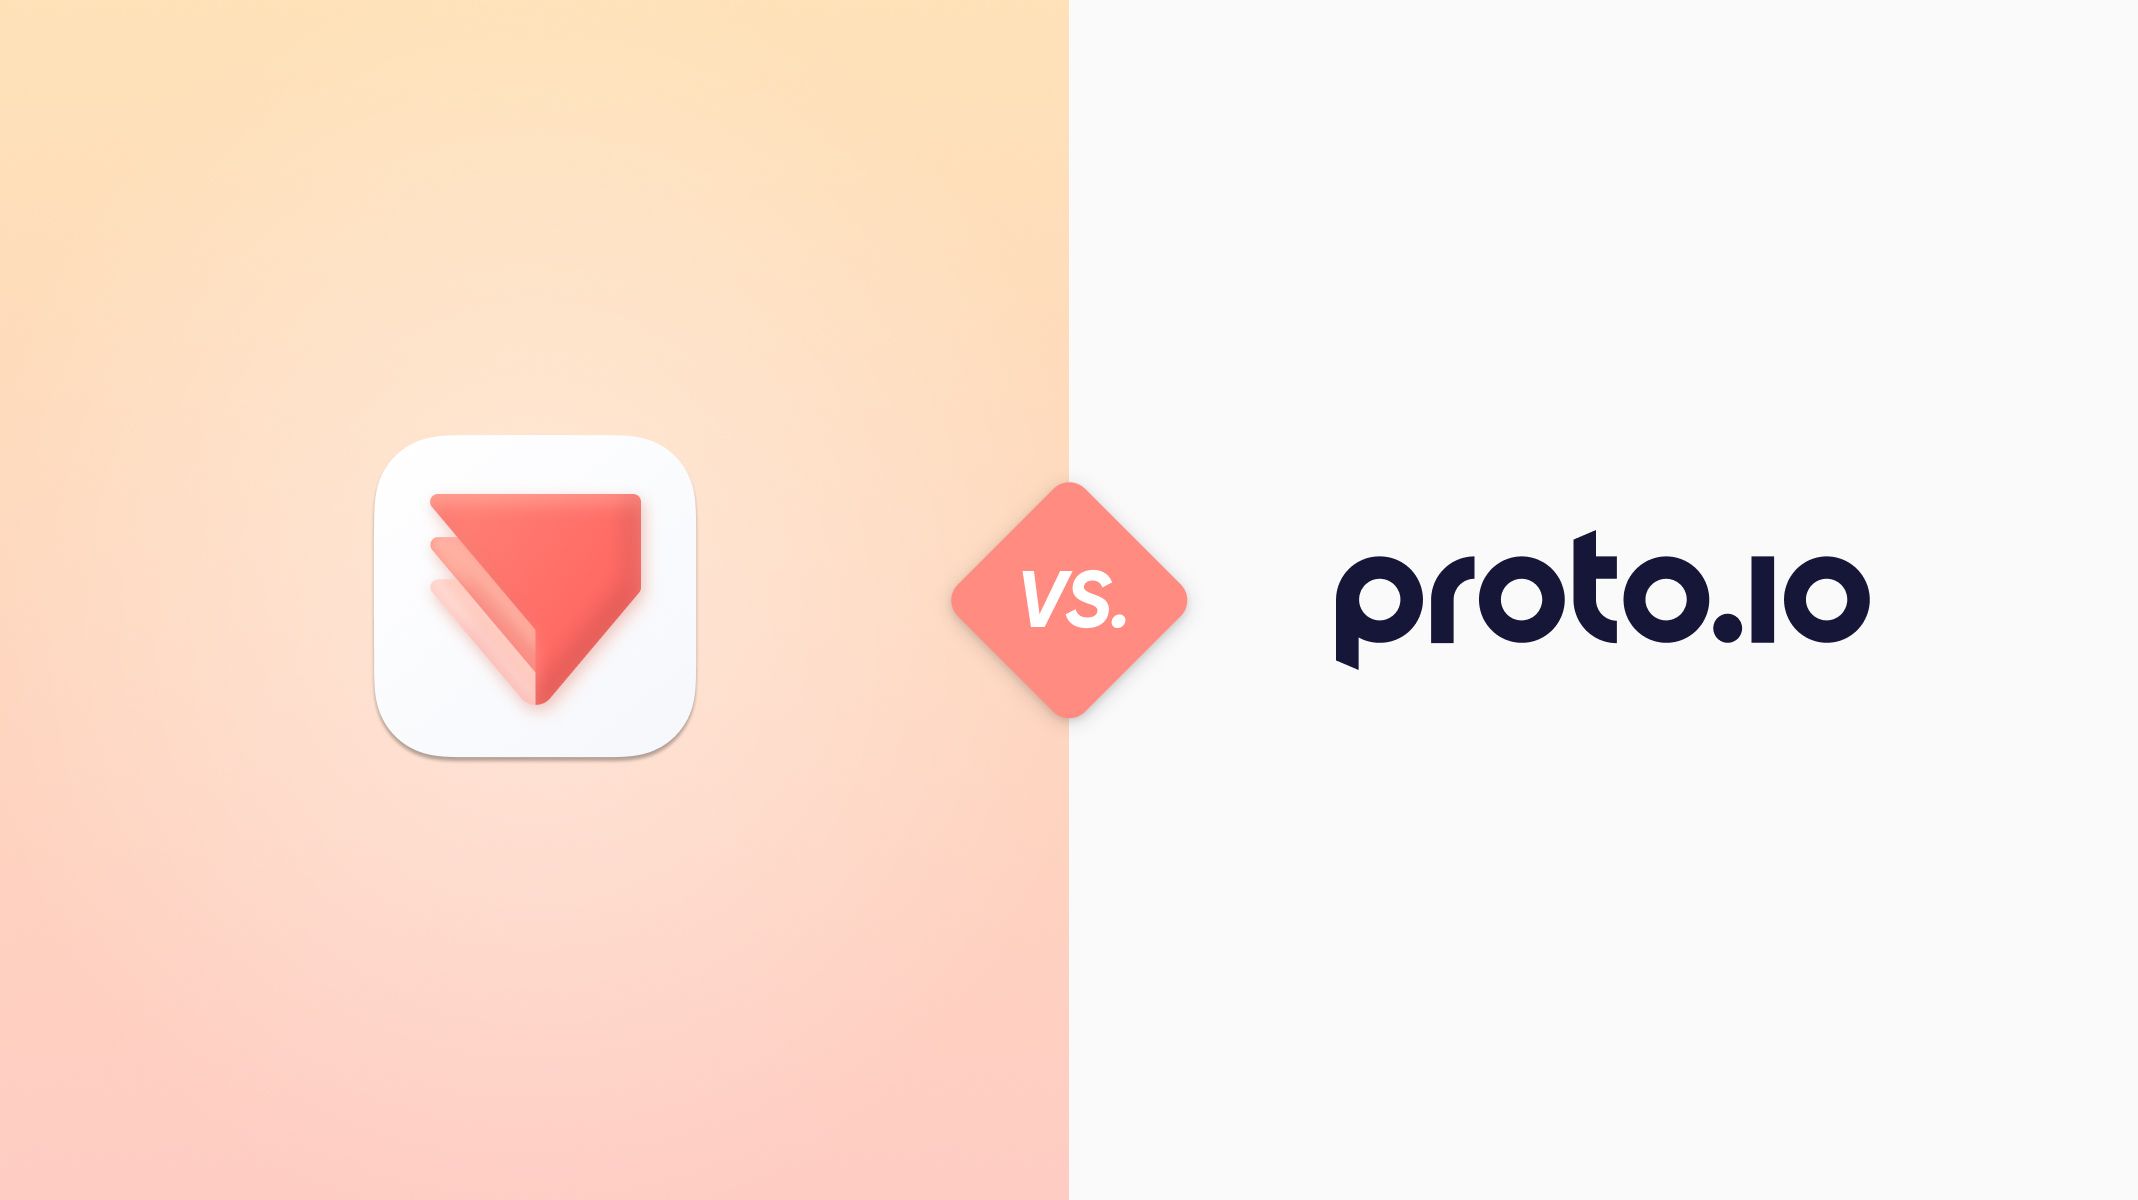 ProtoPie vs. Proto.io: Which Is the Best Prototyping Tool?